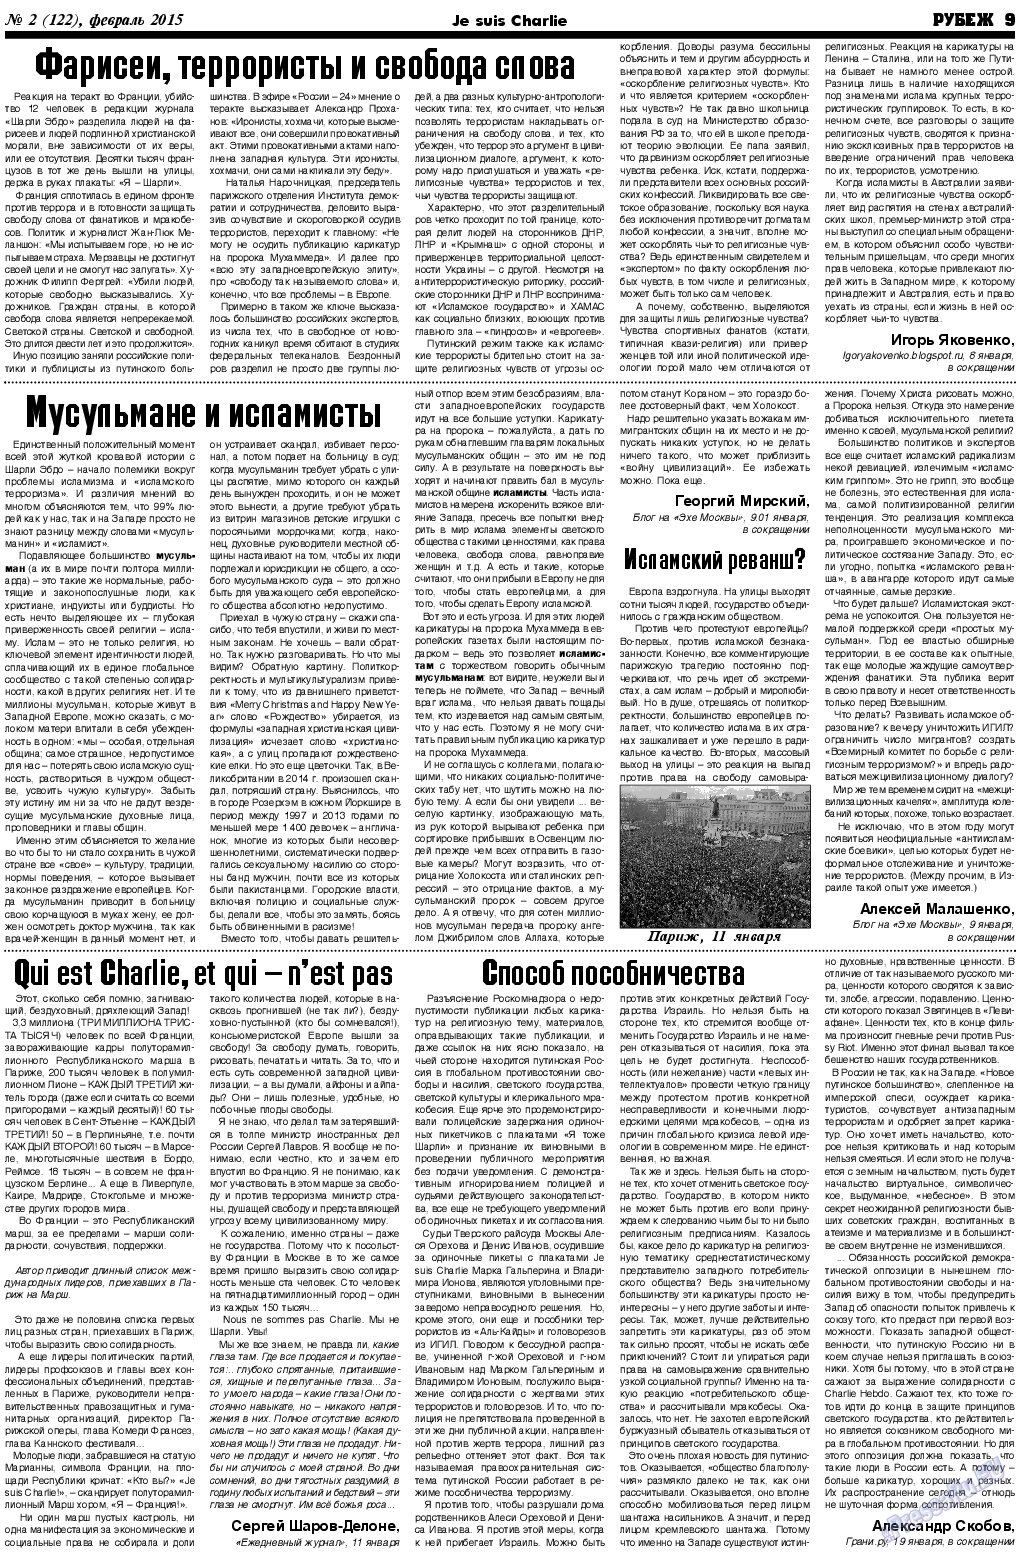 Рубеж, газета. 2015 №2 стр.9